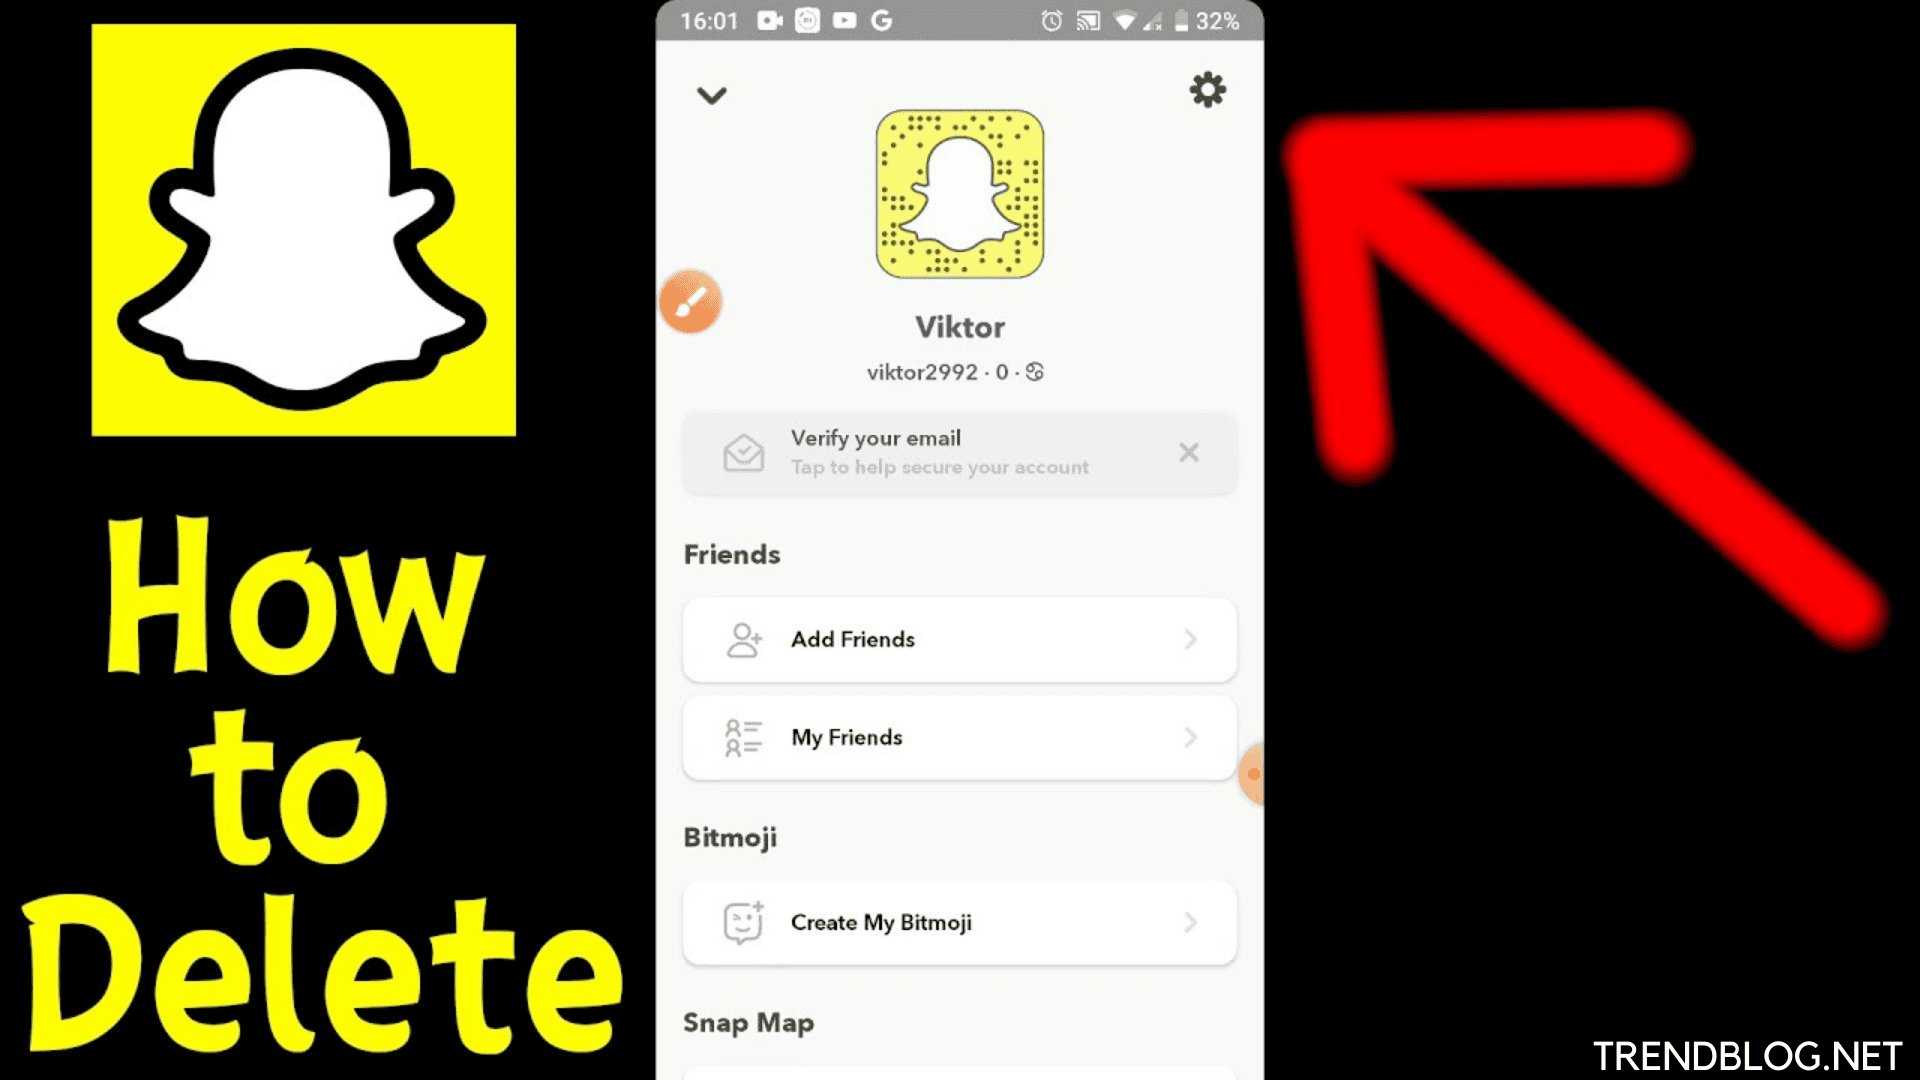  How to Delete Snapchat Account: Delete: Reactivate